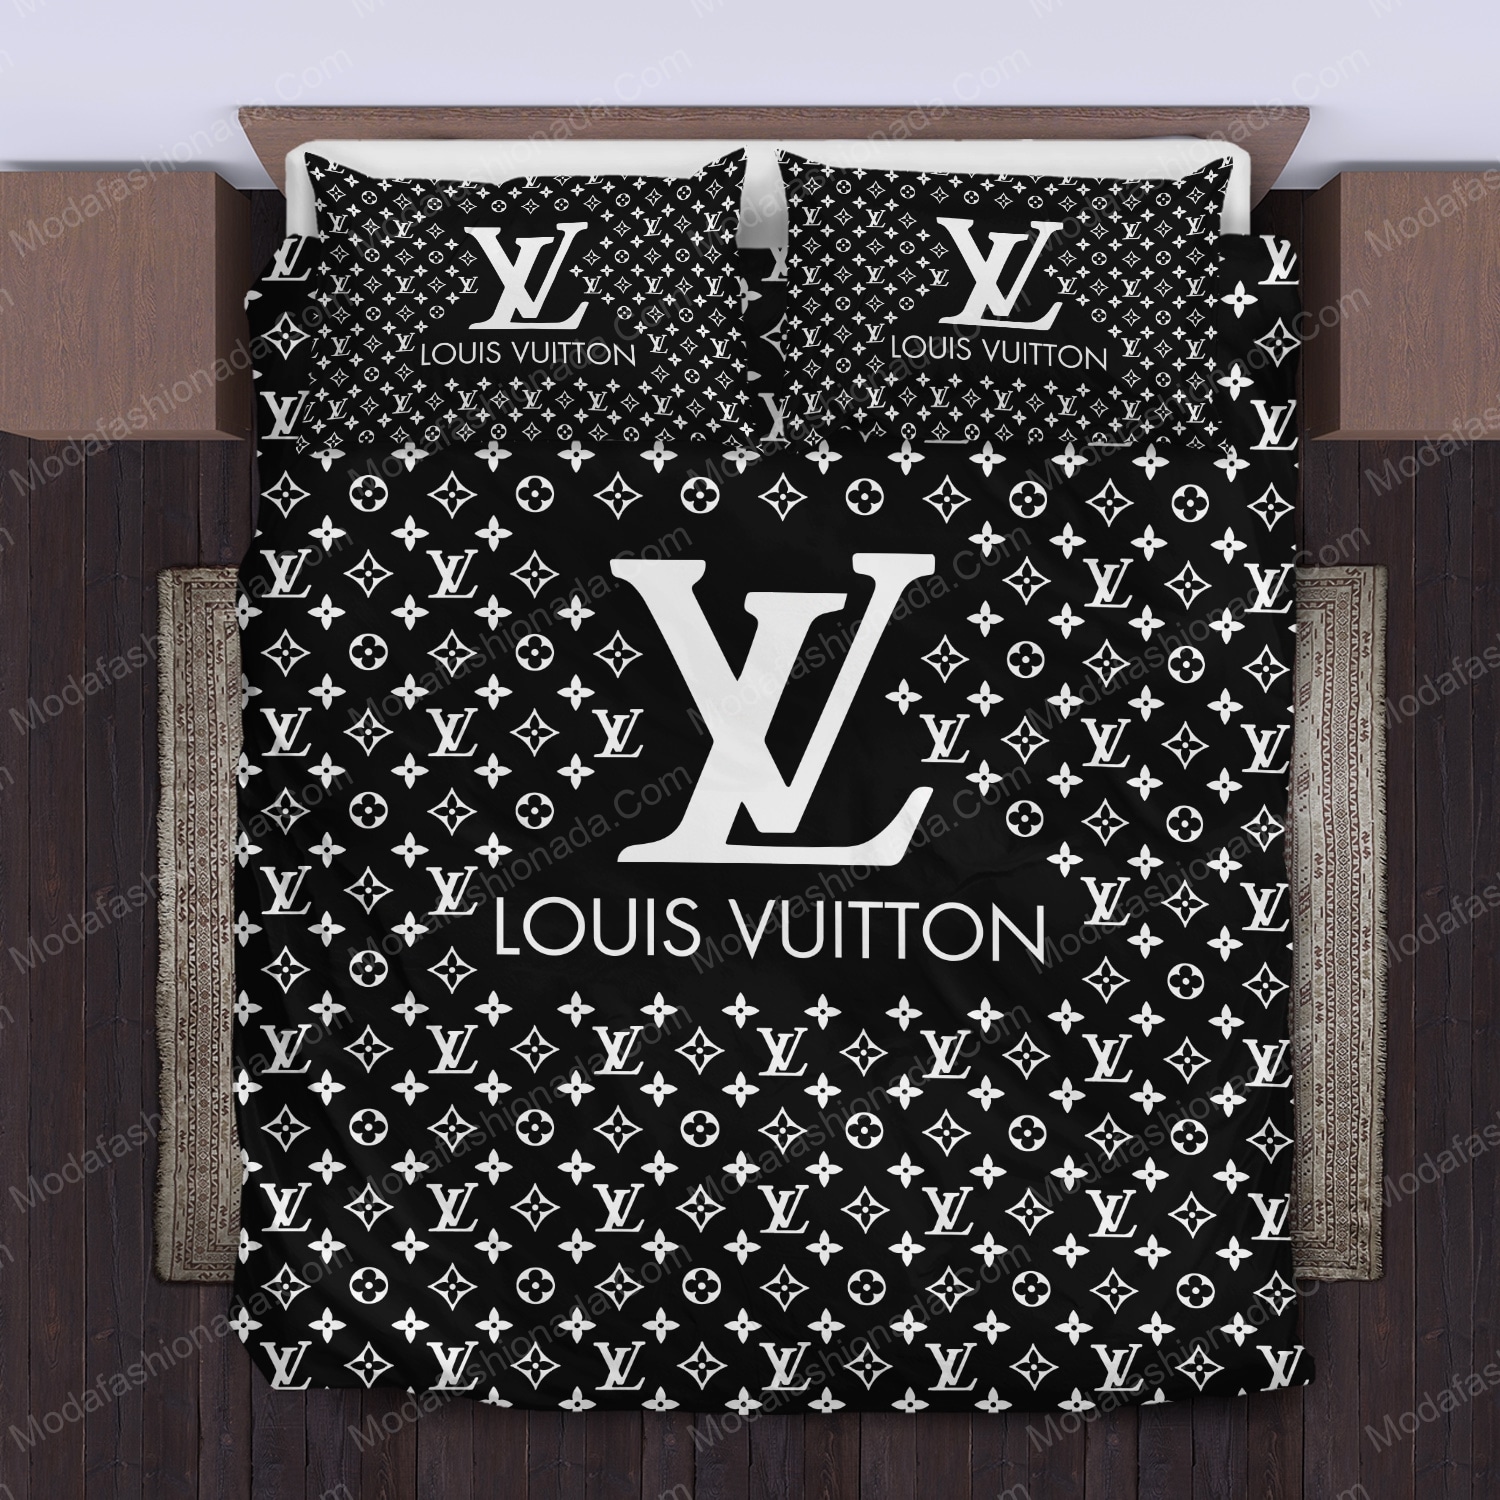 Louis Vuitton Big Logo In Black Monogram Background Comforter Bedding Set -  Mugteeco